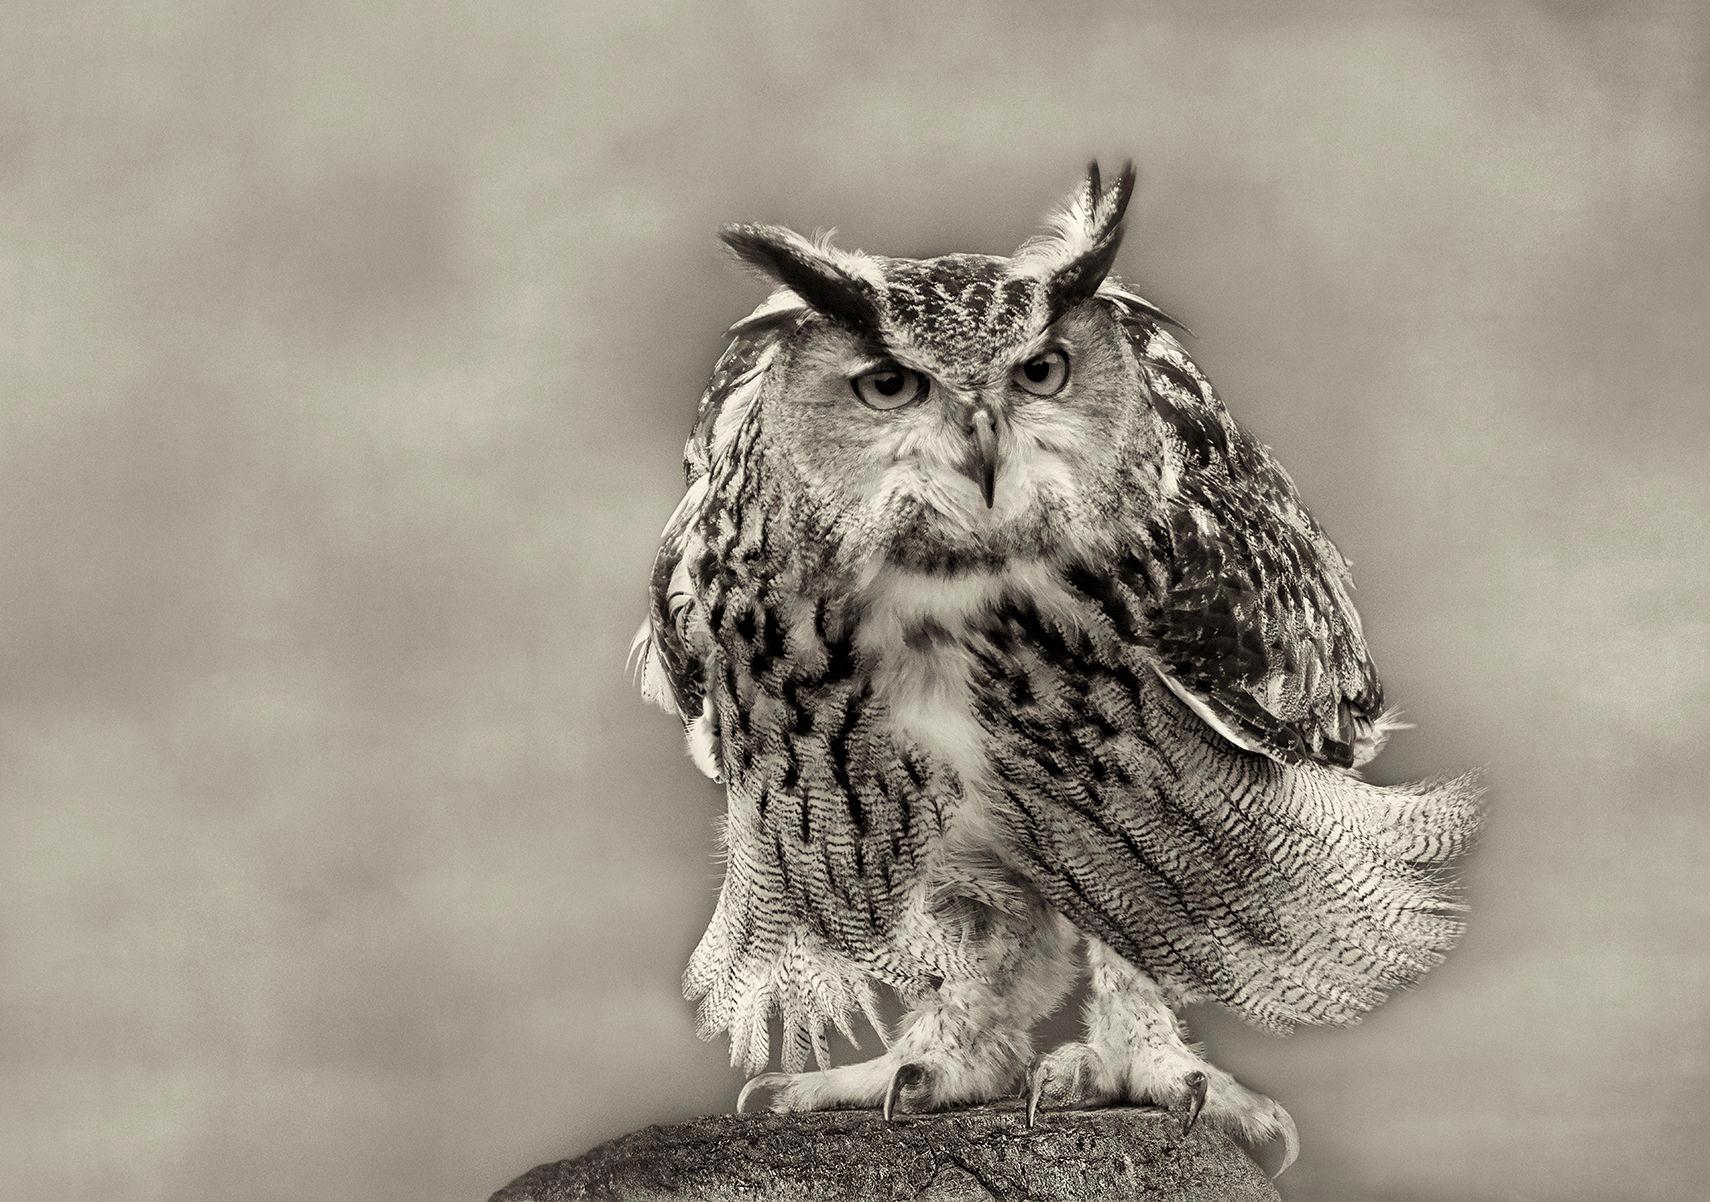 Beth Moon Black and White Photograph - Eurasian Eagle Owl, limited edition photograph, signed, Platinum/Palladium Print